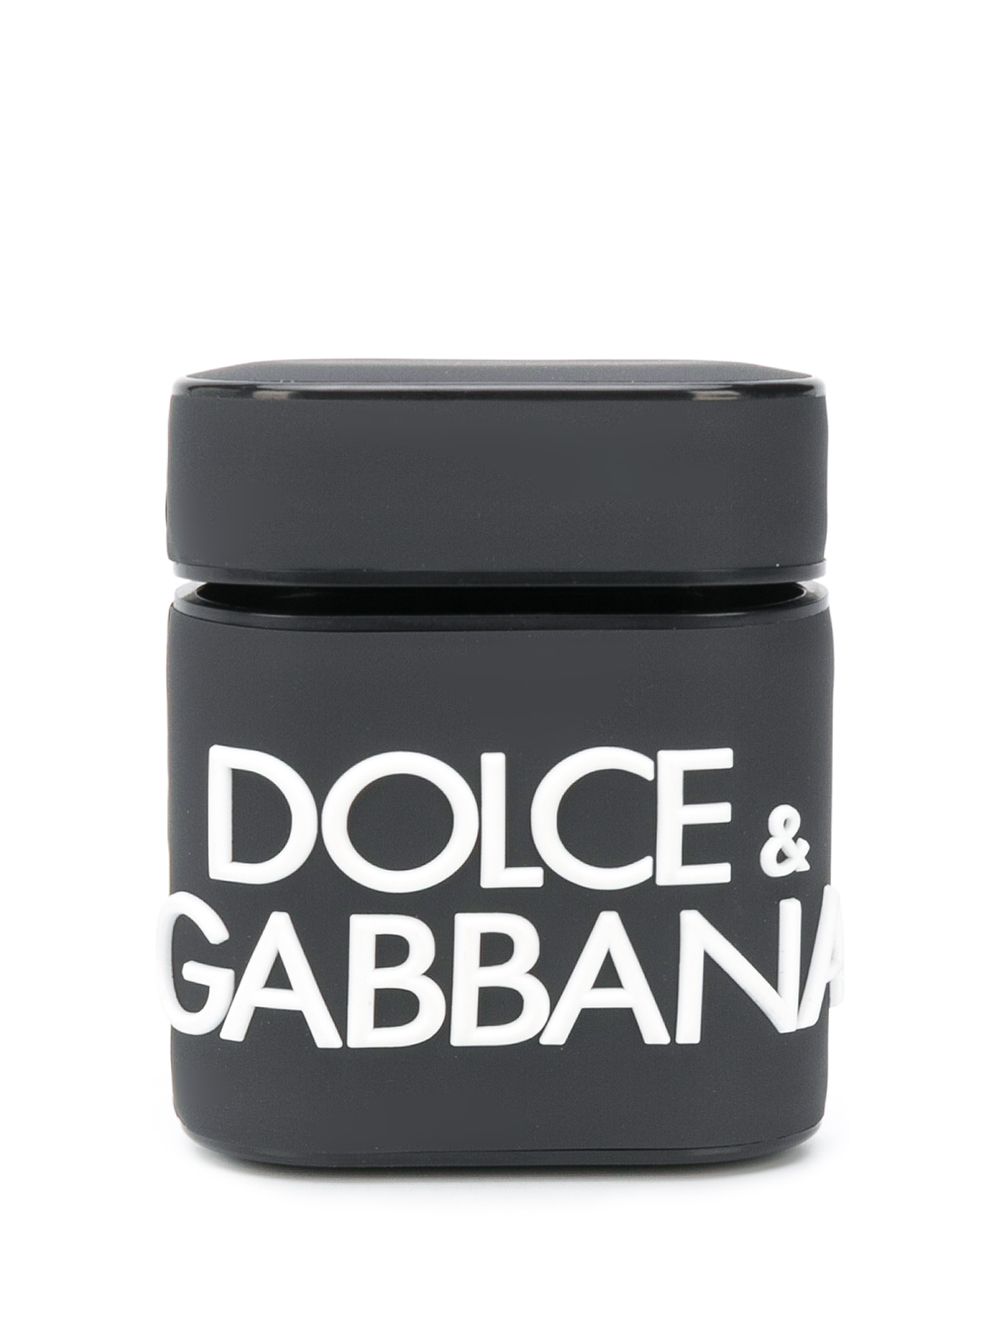 фото Dolce & gabbana чехол для airpods с логотипом